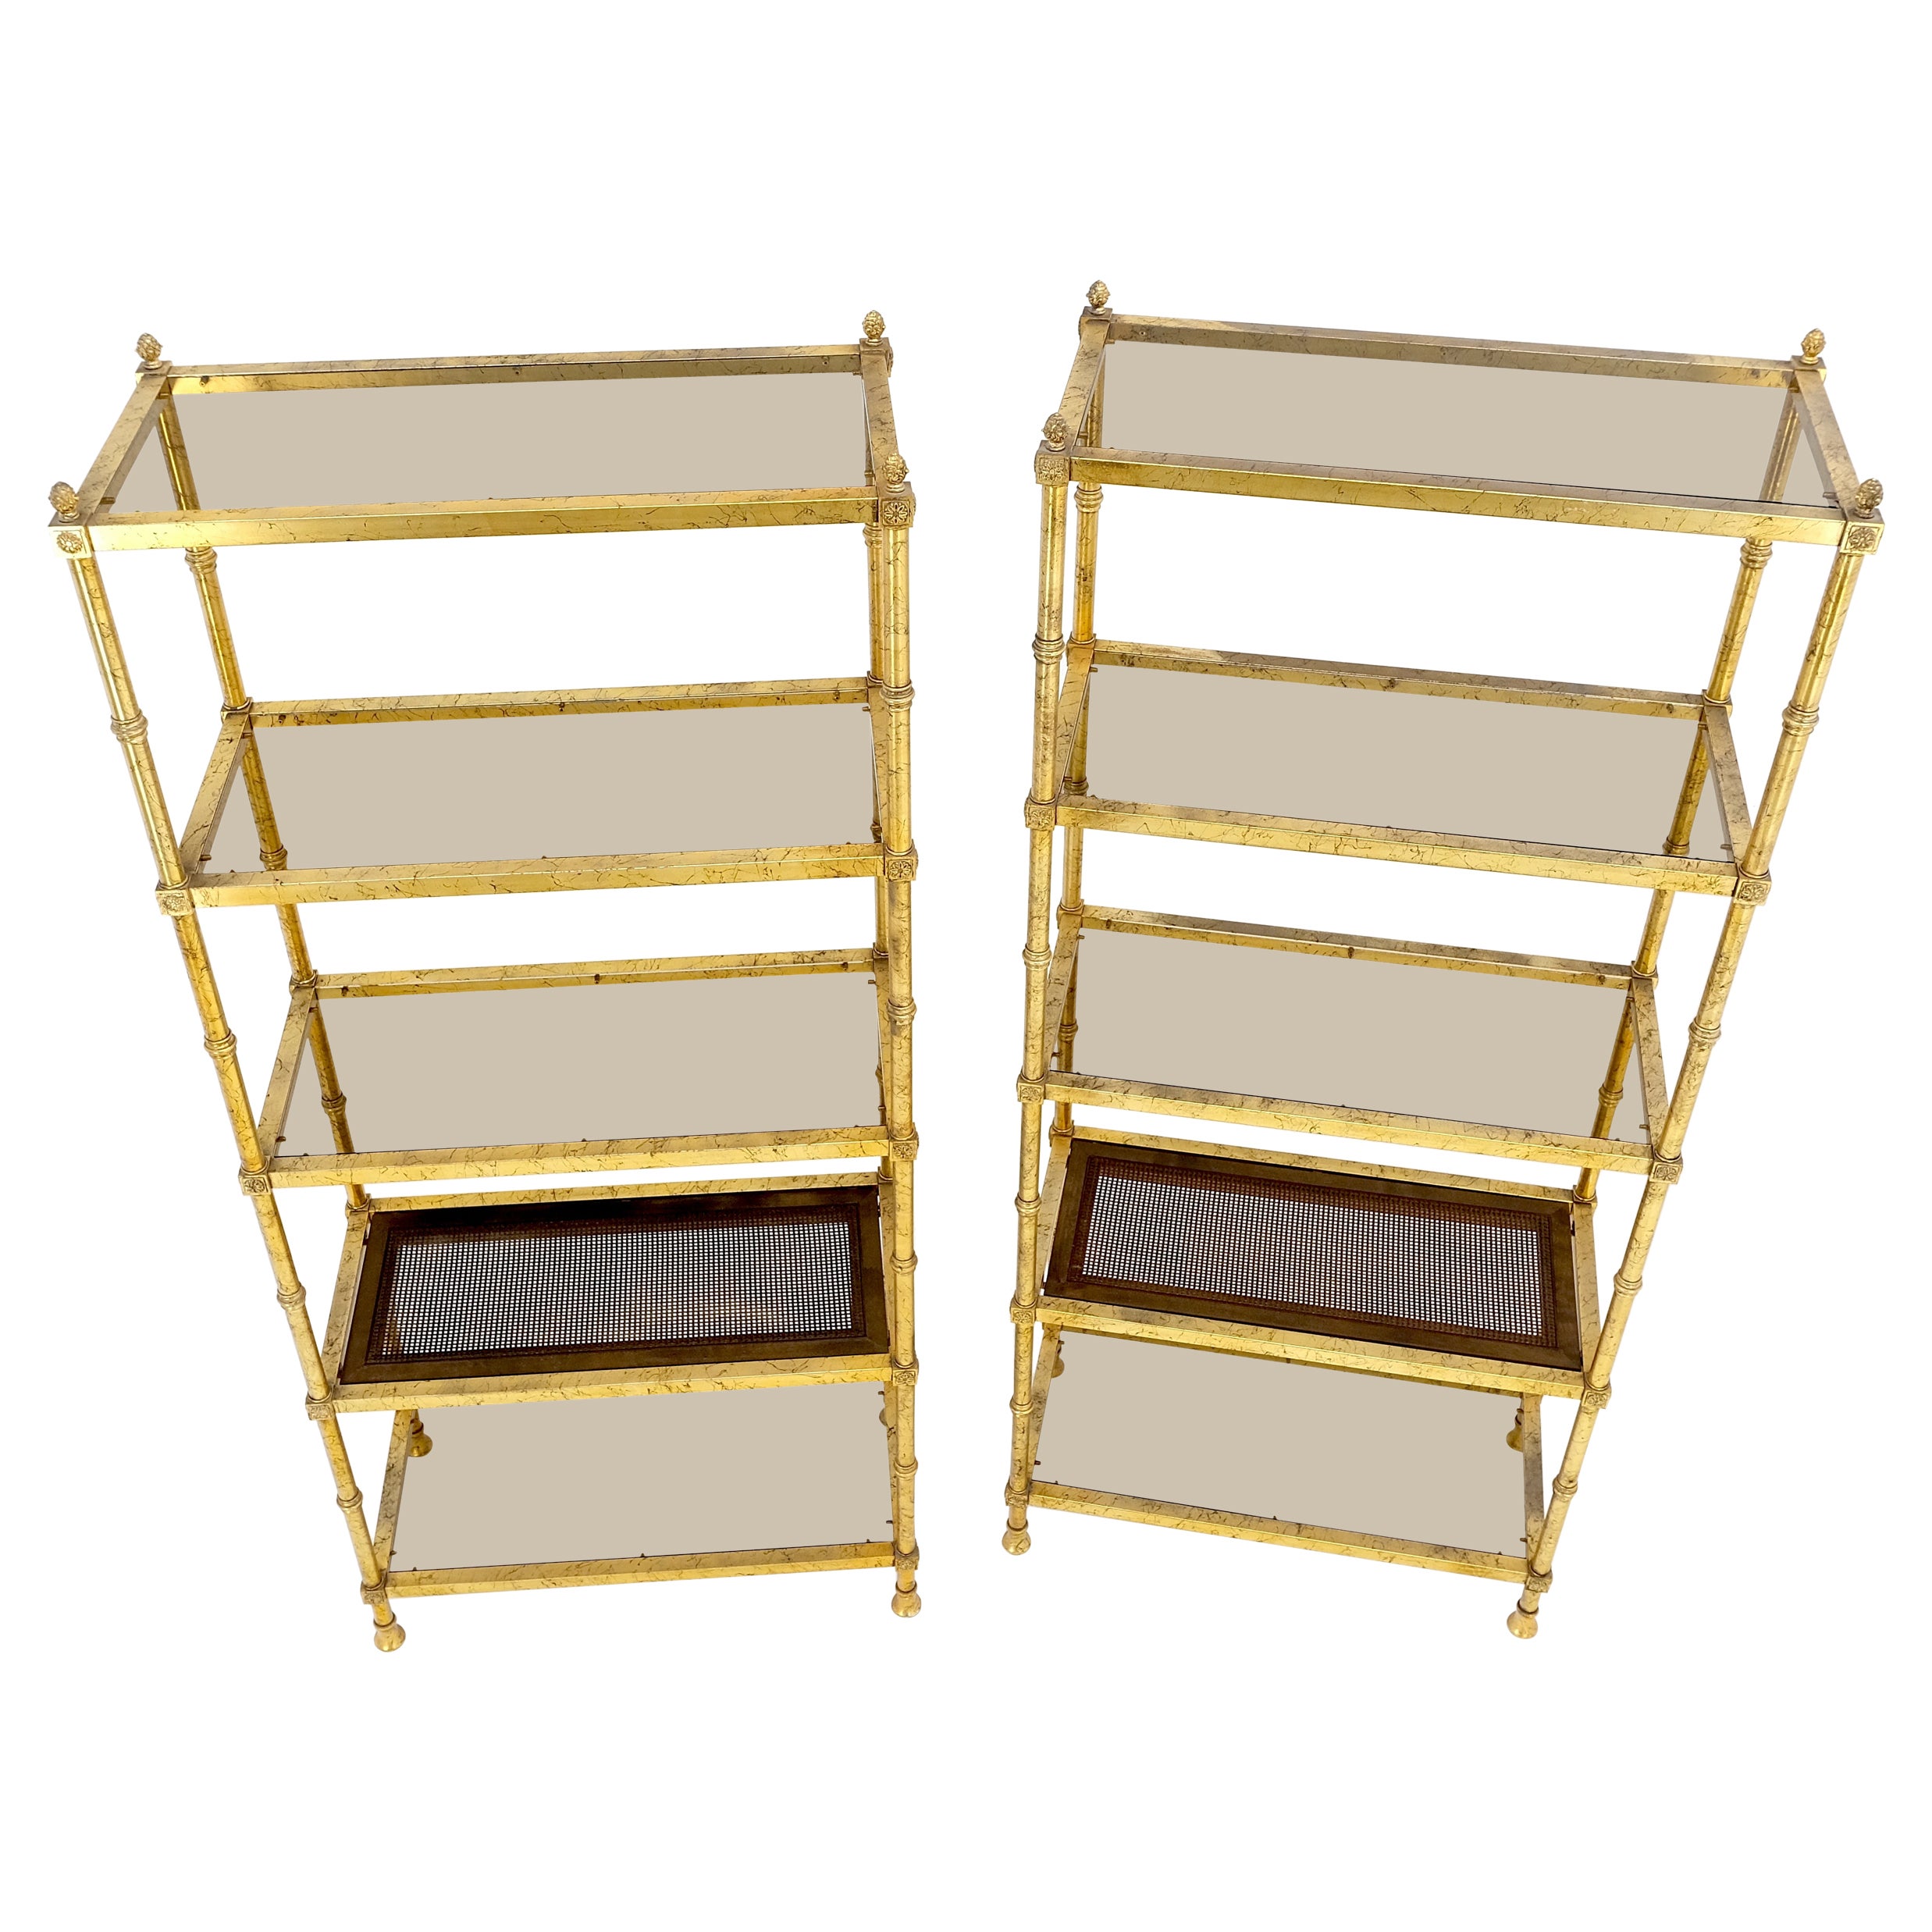 Pair of Gold Finish Cane & Glass Shelf Decorative Etageres Display Wall Units